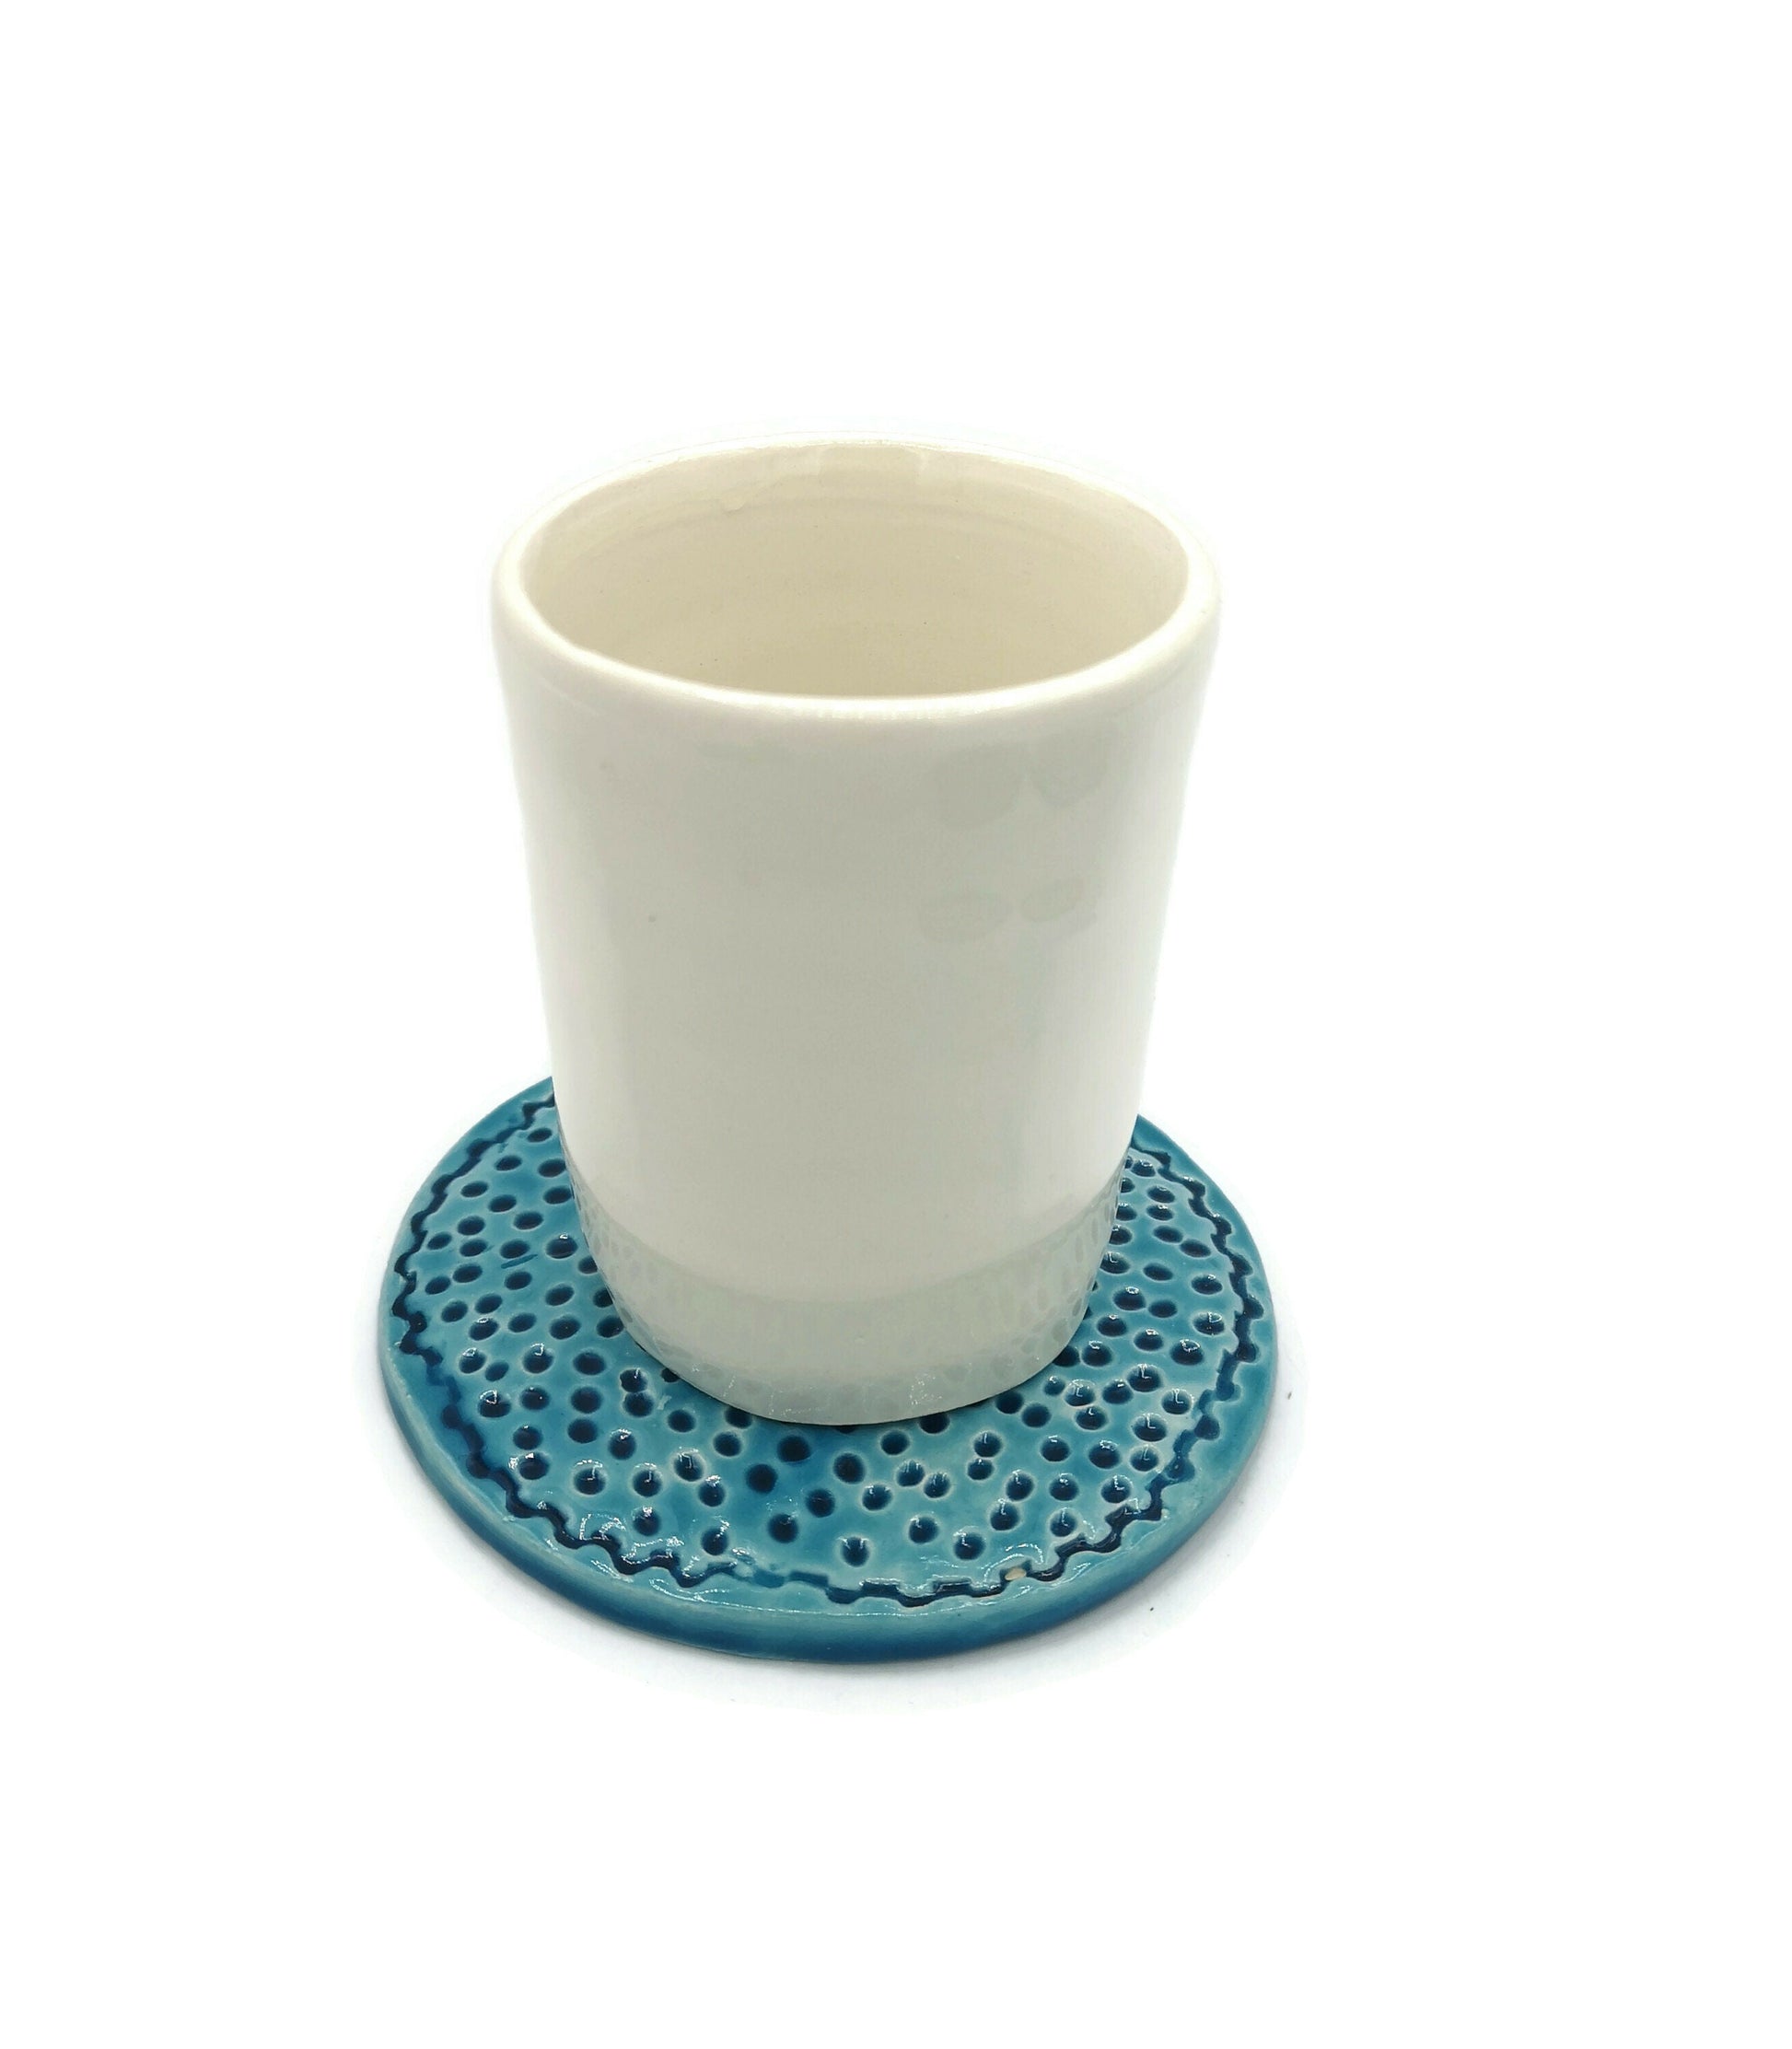 AESTHETIC CERAMIC COASTERS, Modern Round Office Coasters Handmade, Housewarming Gift First Home Clay Coasters - Ceramica Ana Rafael